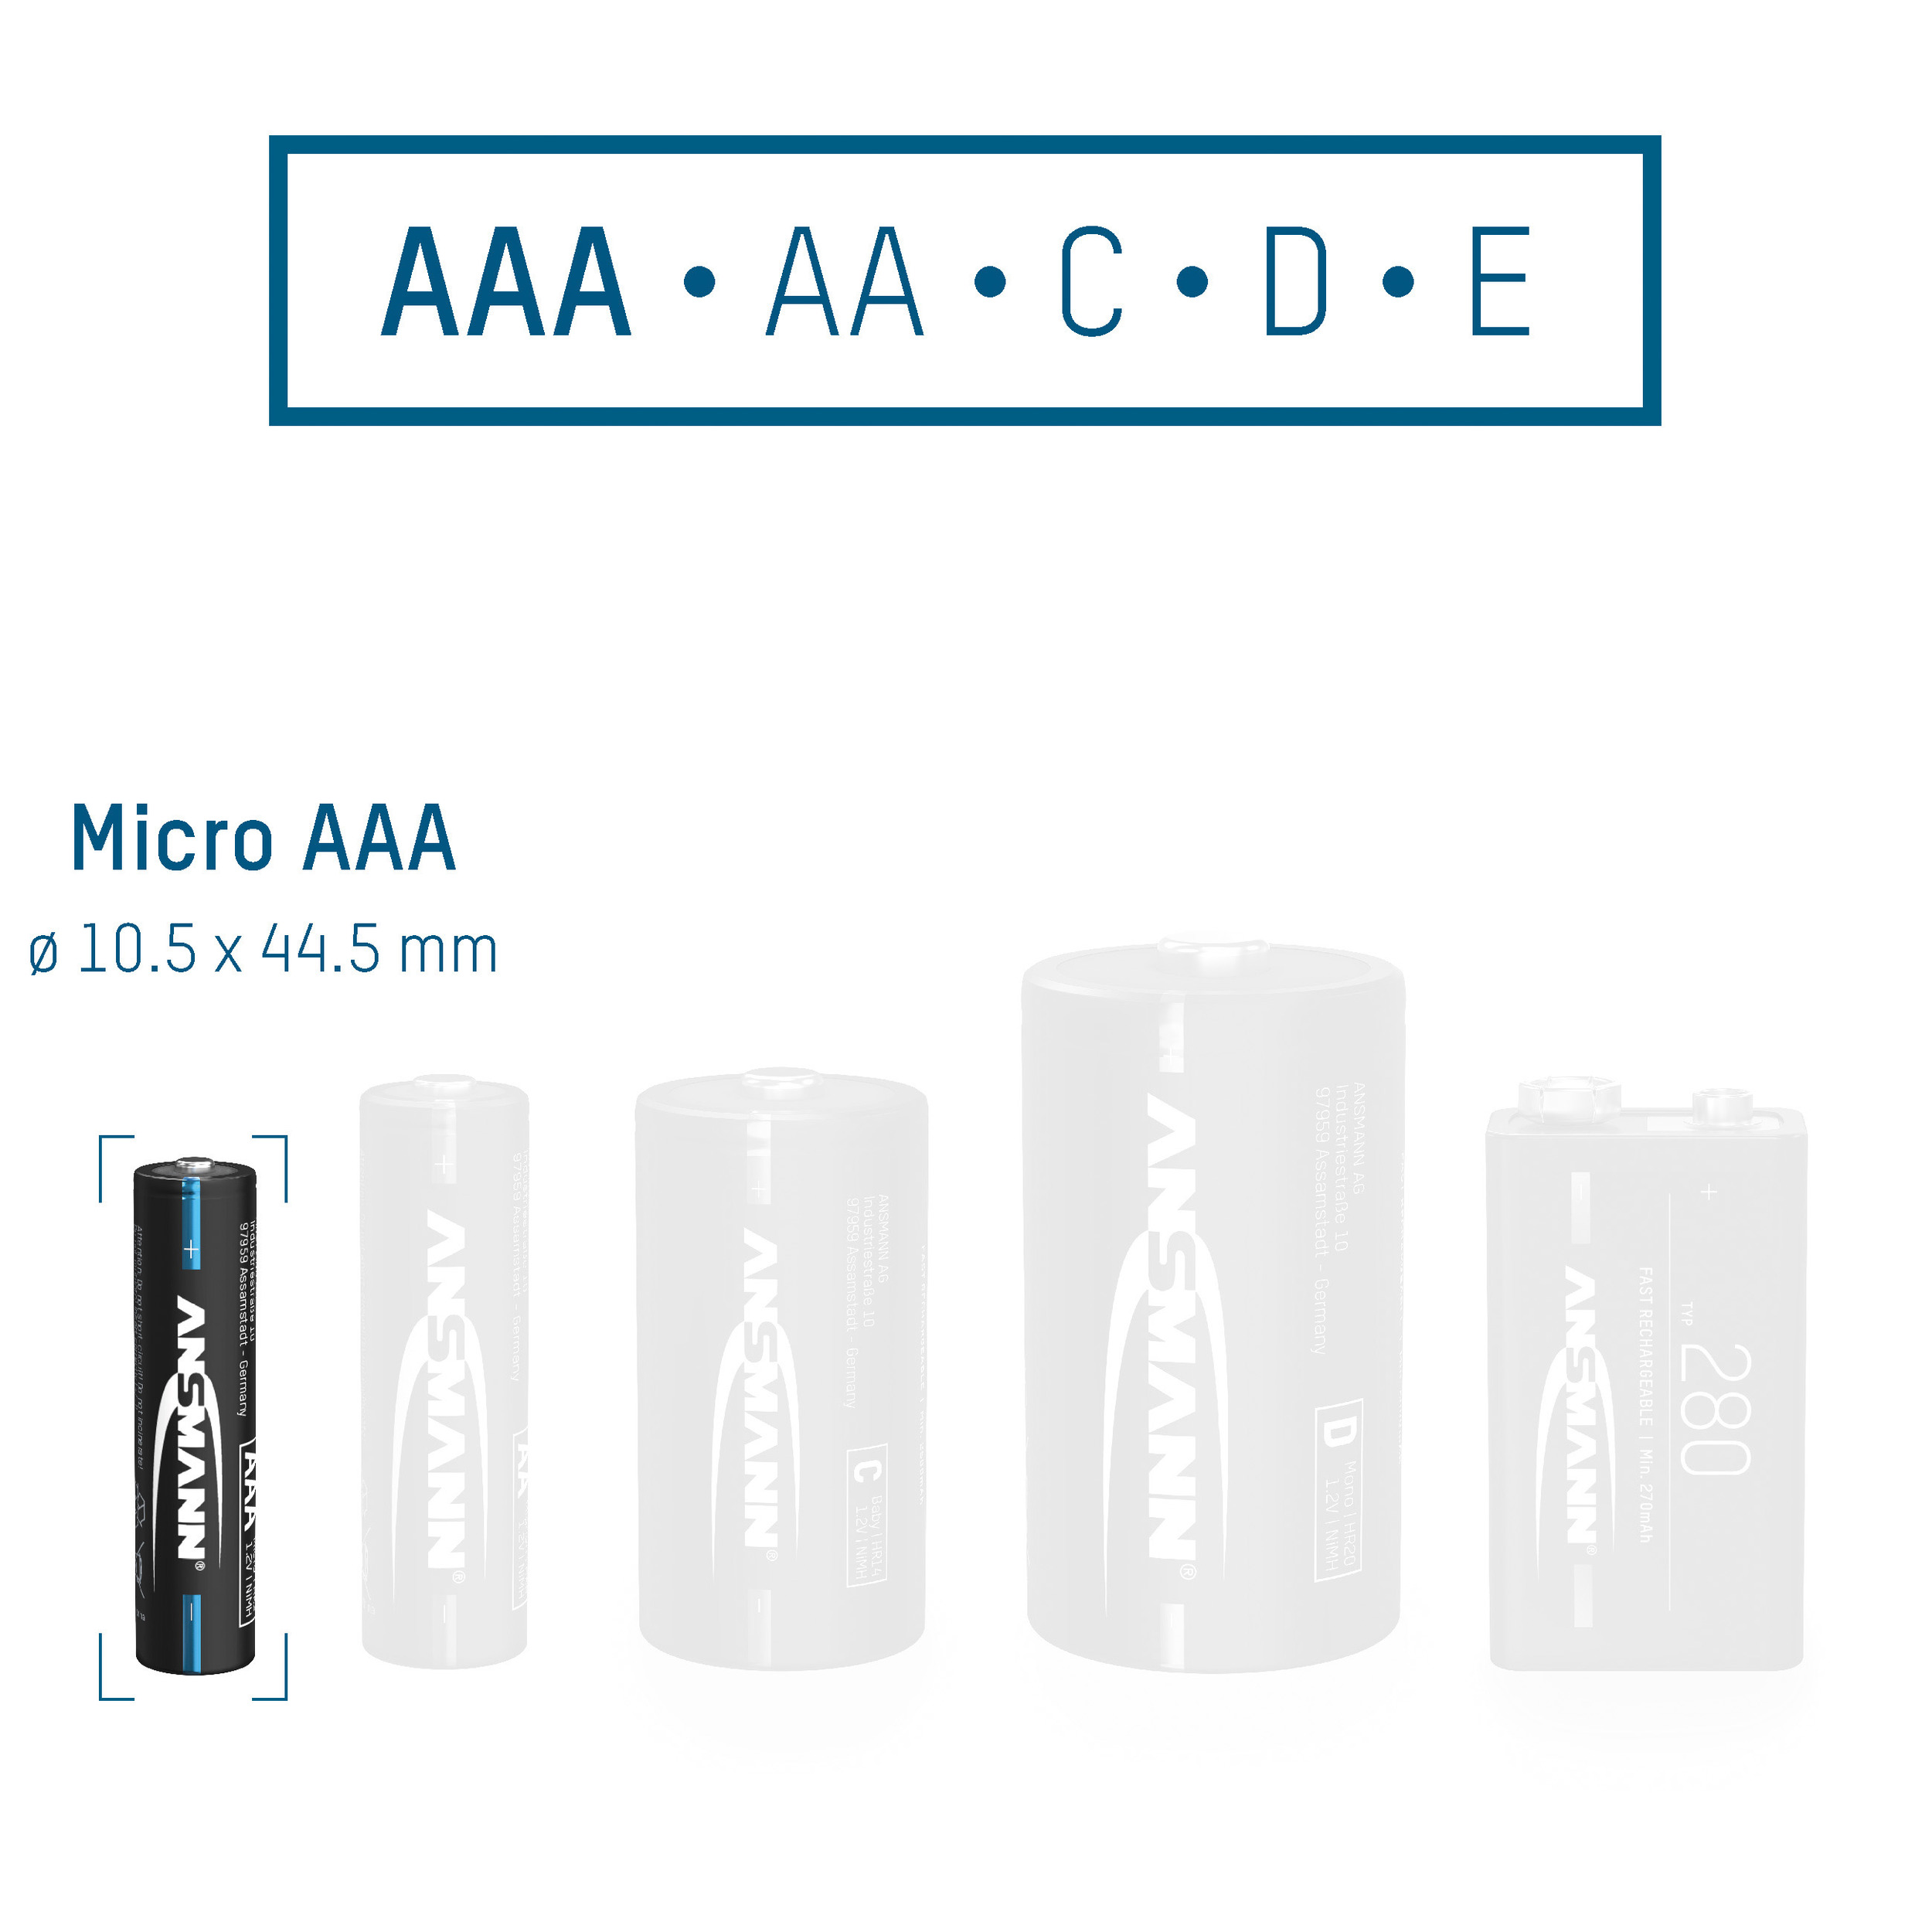 ANSMANN Black Edition Akku 1050 wiederaufladbar AAA 1.2 Micro Nickel-Metallhydrid mAh 1050 (NiMH), Stück 8 Volt, Batterie